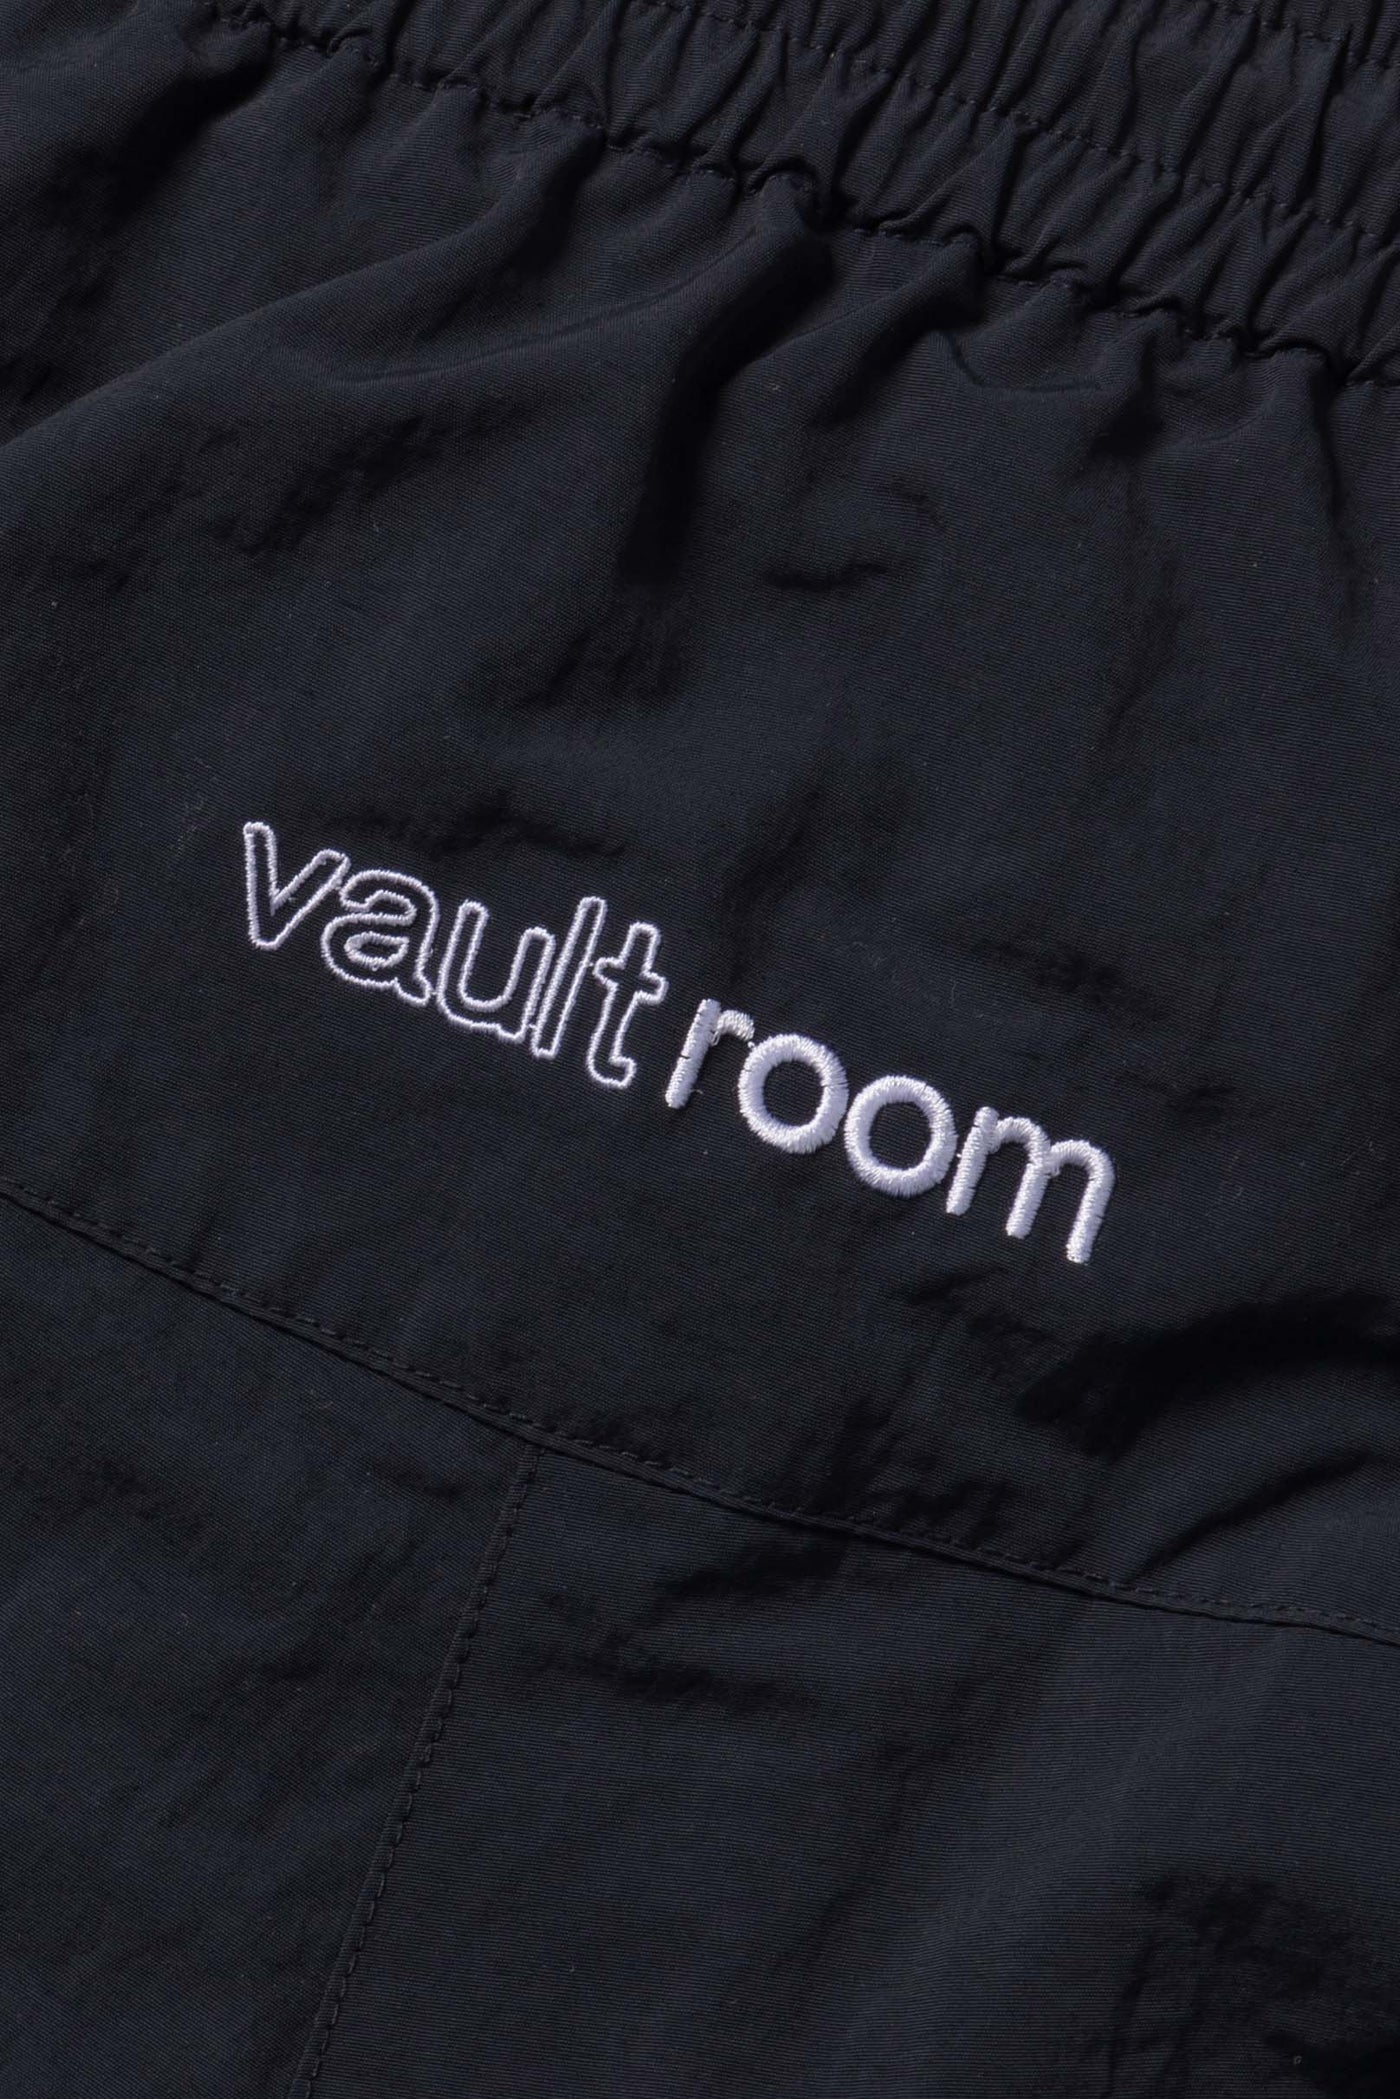 Vaultroom VGC WATER SHORTS BLACK Mサイズ